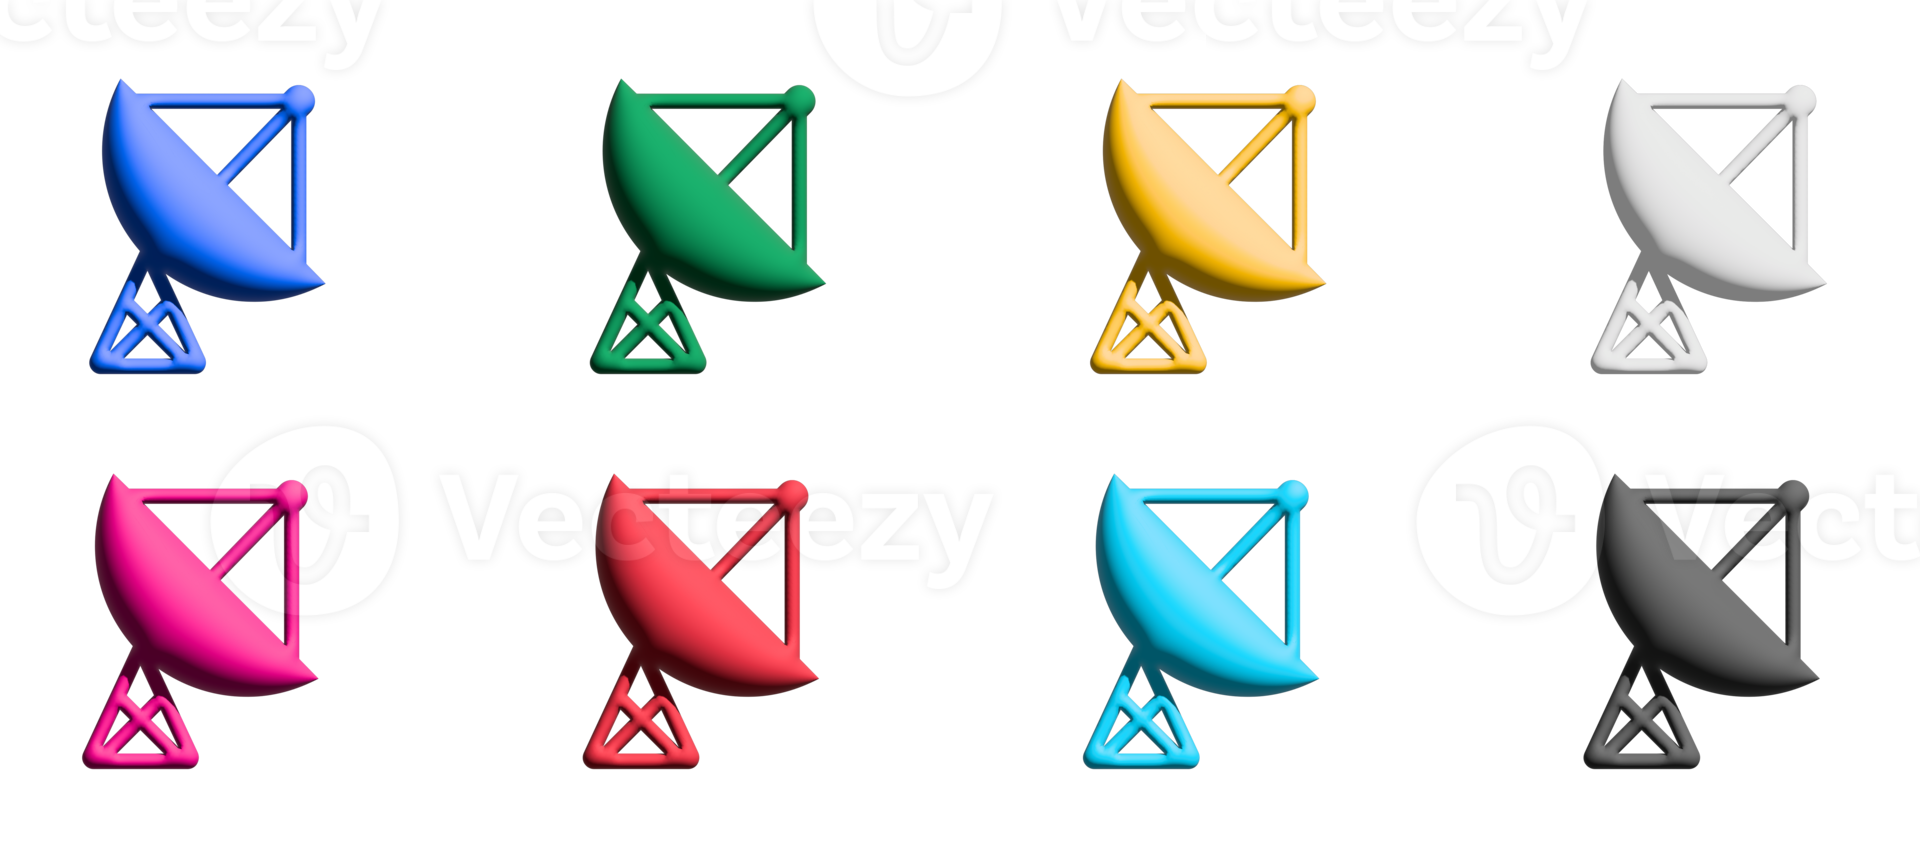 Satellite dish icon set, colorful symbols graphic elements png